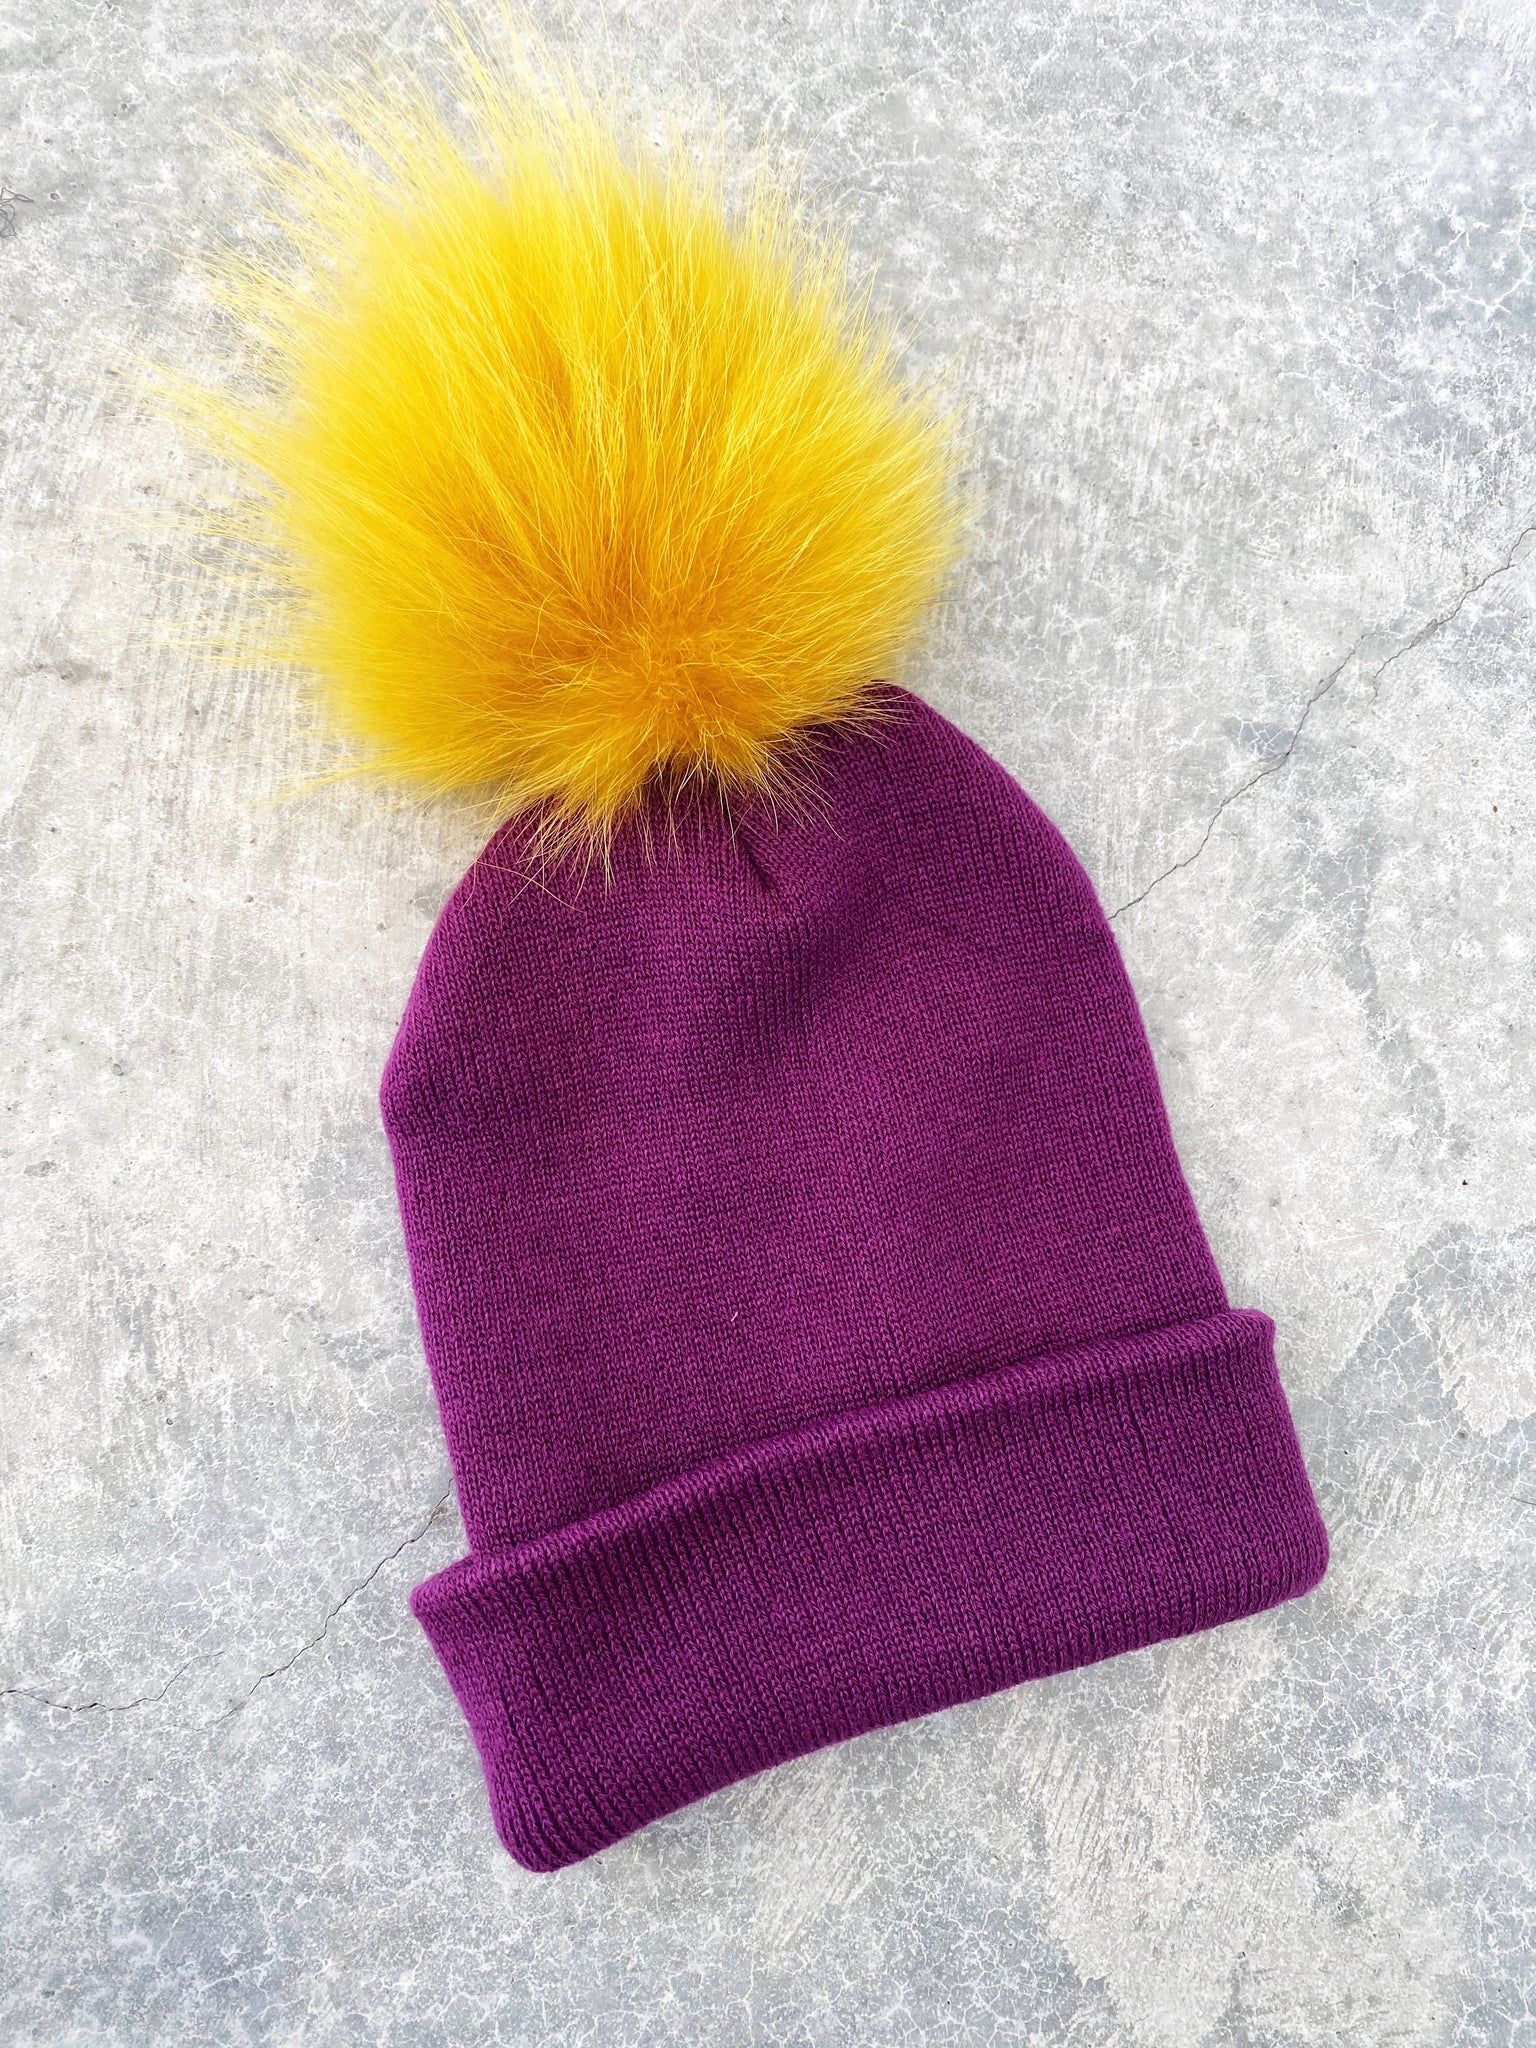 Purple Knit Hat w/ Yellow Fur PomPom